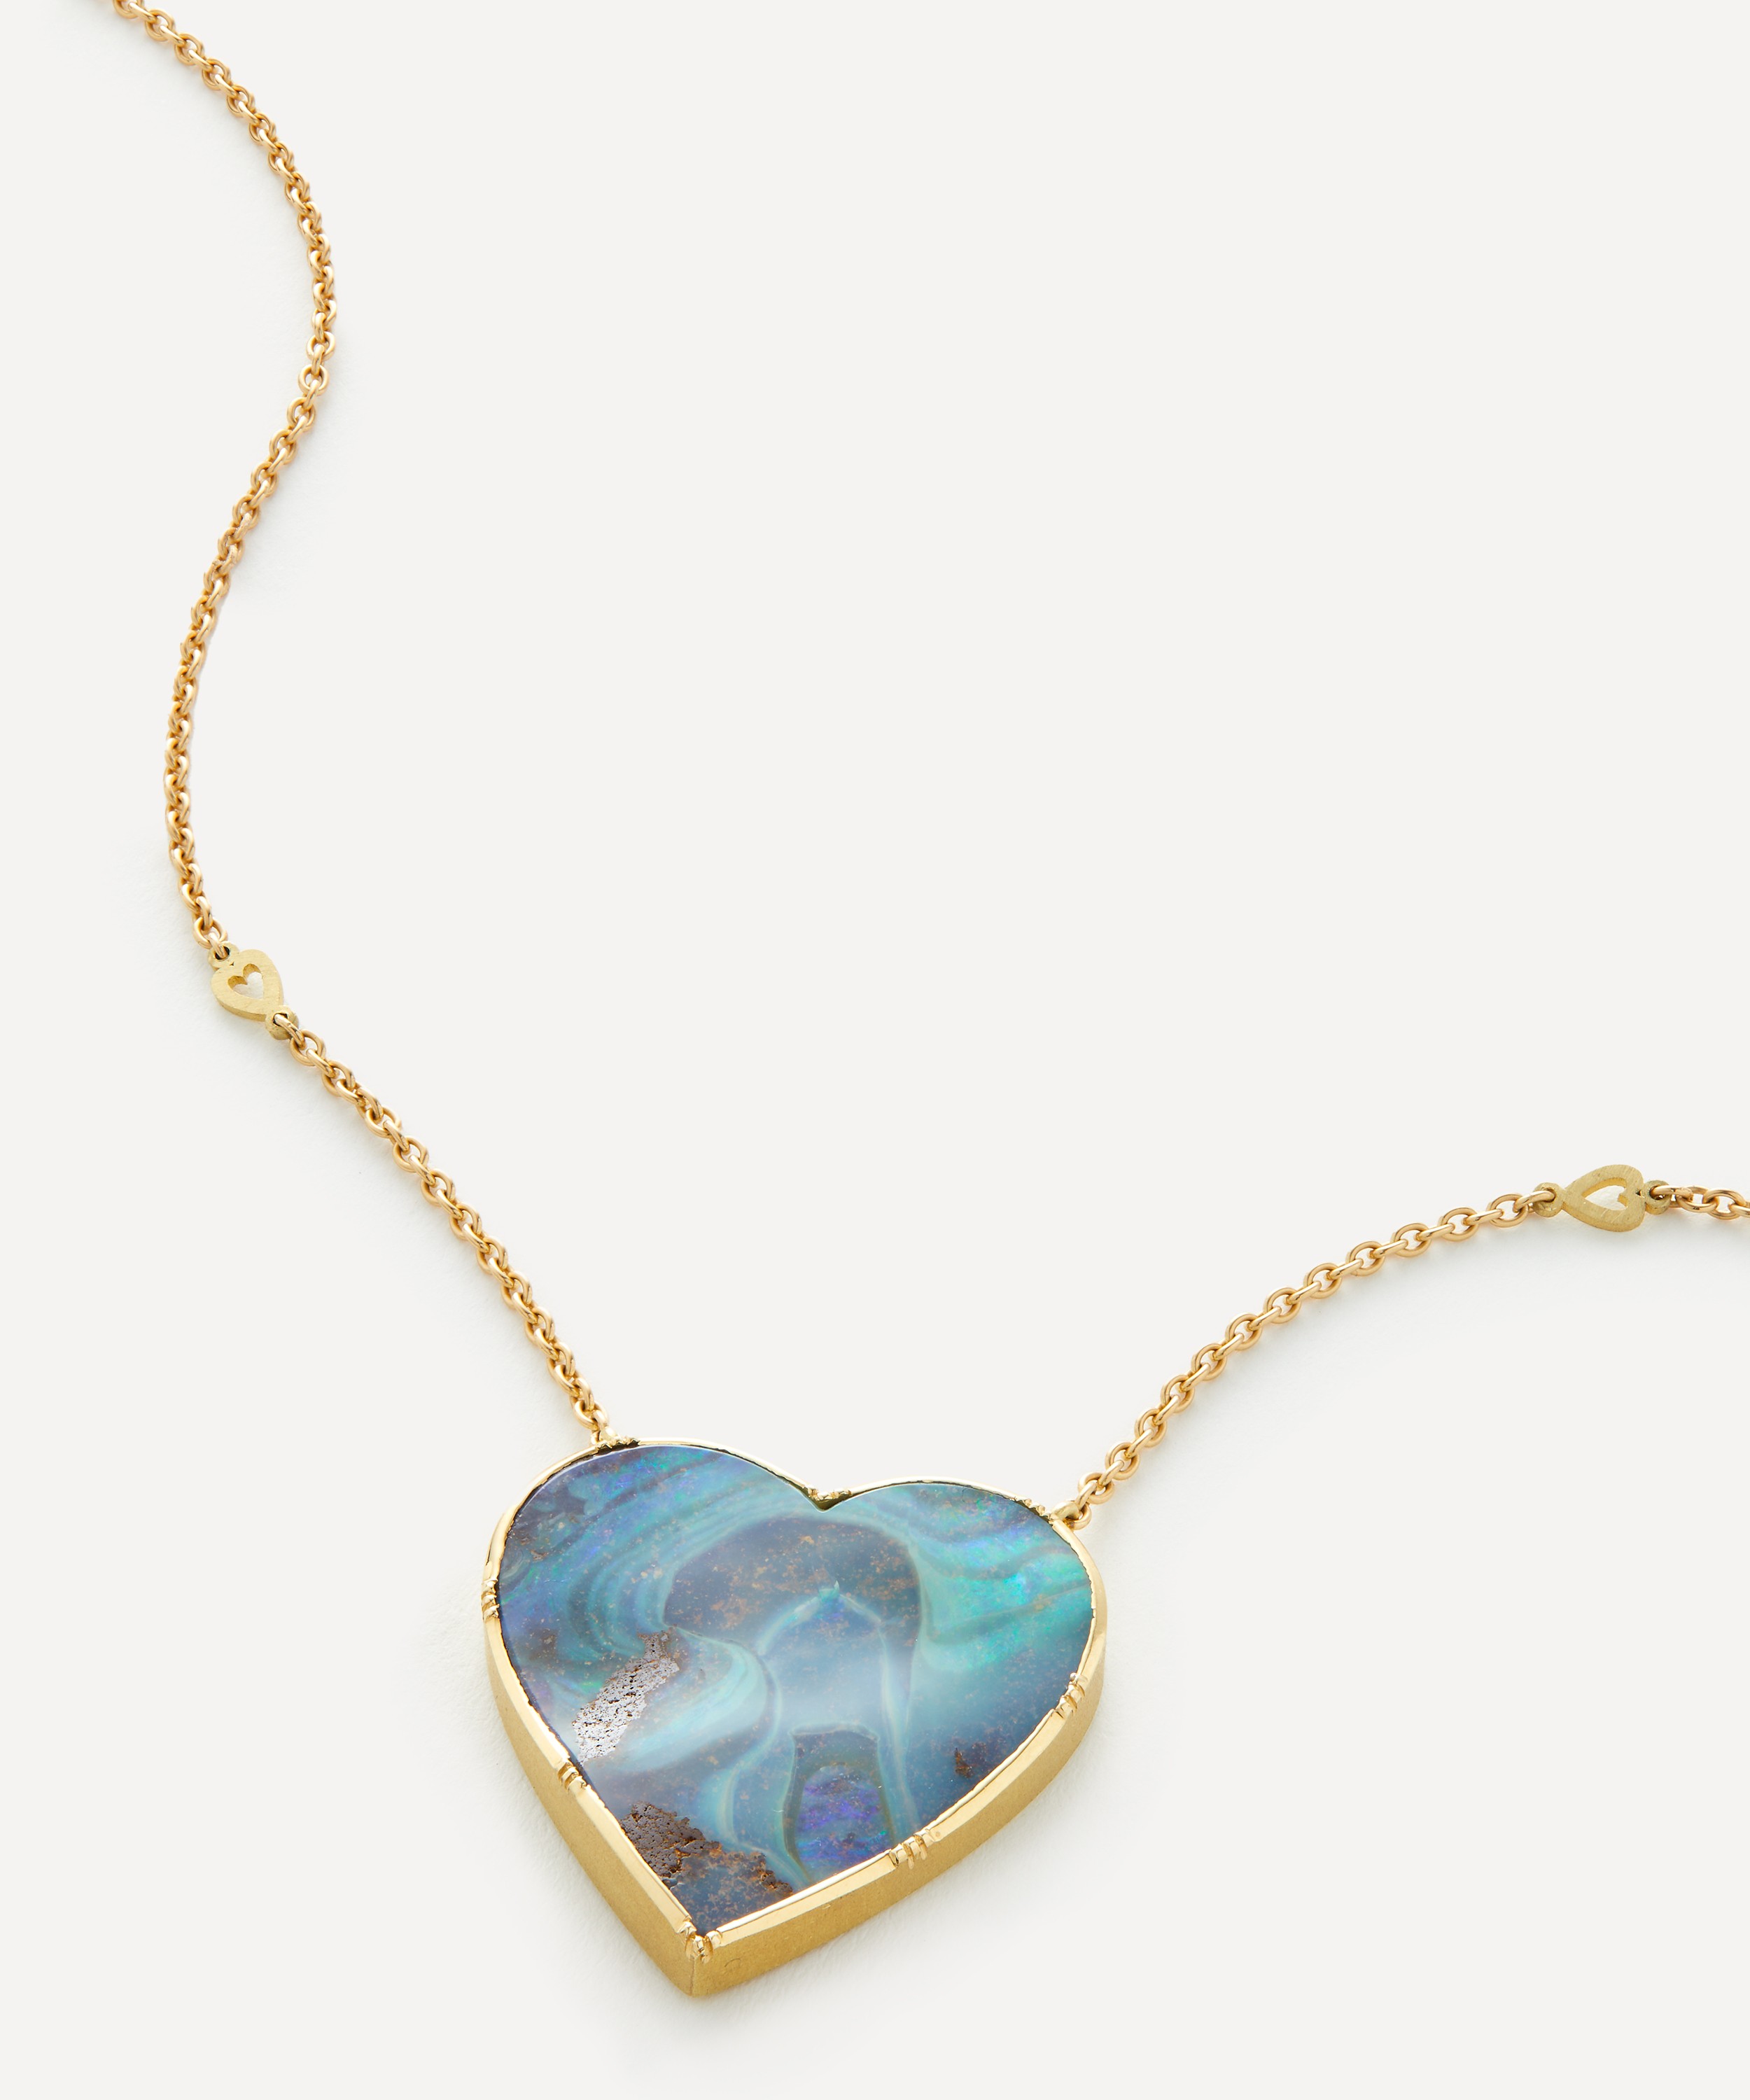 Brooke Gregson - 18ct Gold Boulder Opal Heart Pendant Necklace